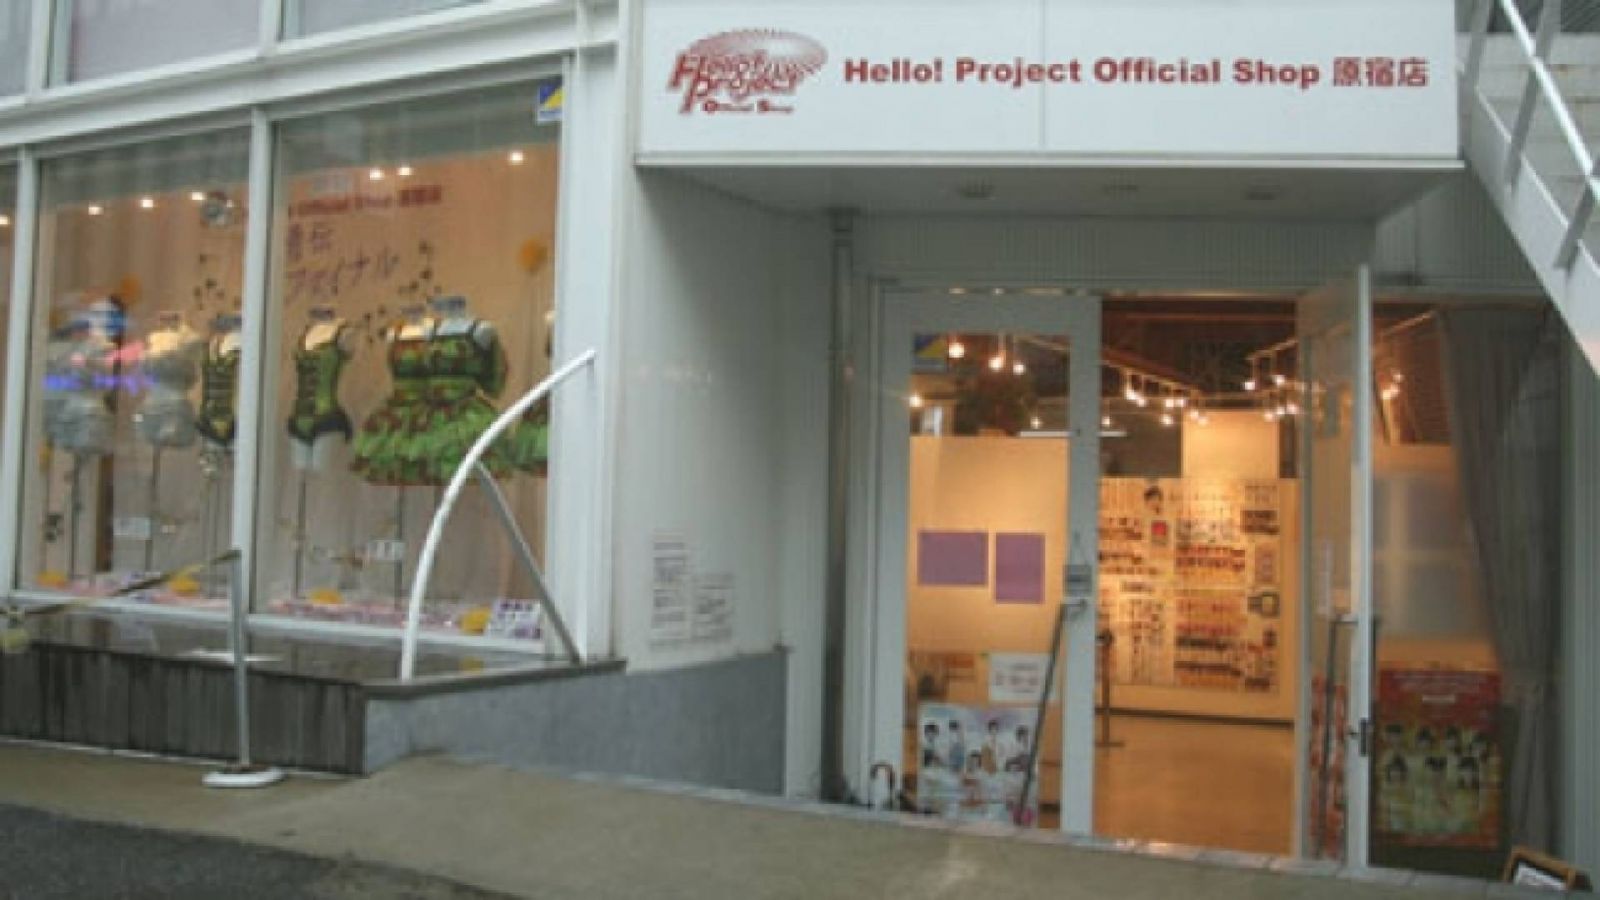 Презентация официального магазина Hello!Project в Харадзюку © 2008 UP-FRONT AGENCY - JaME - Philippe Hayot